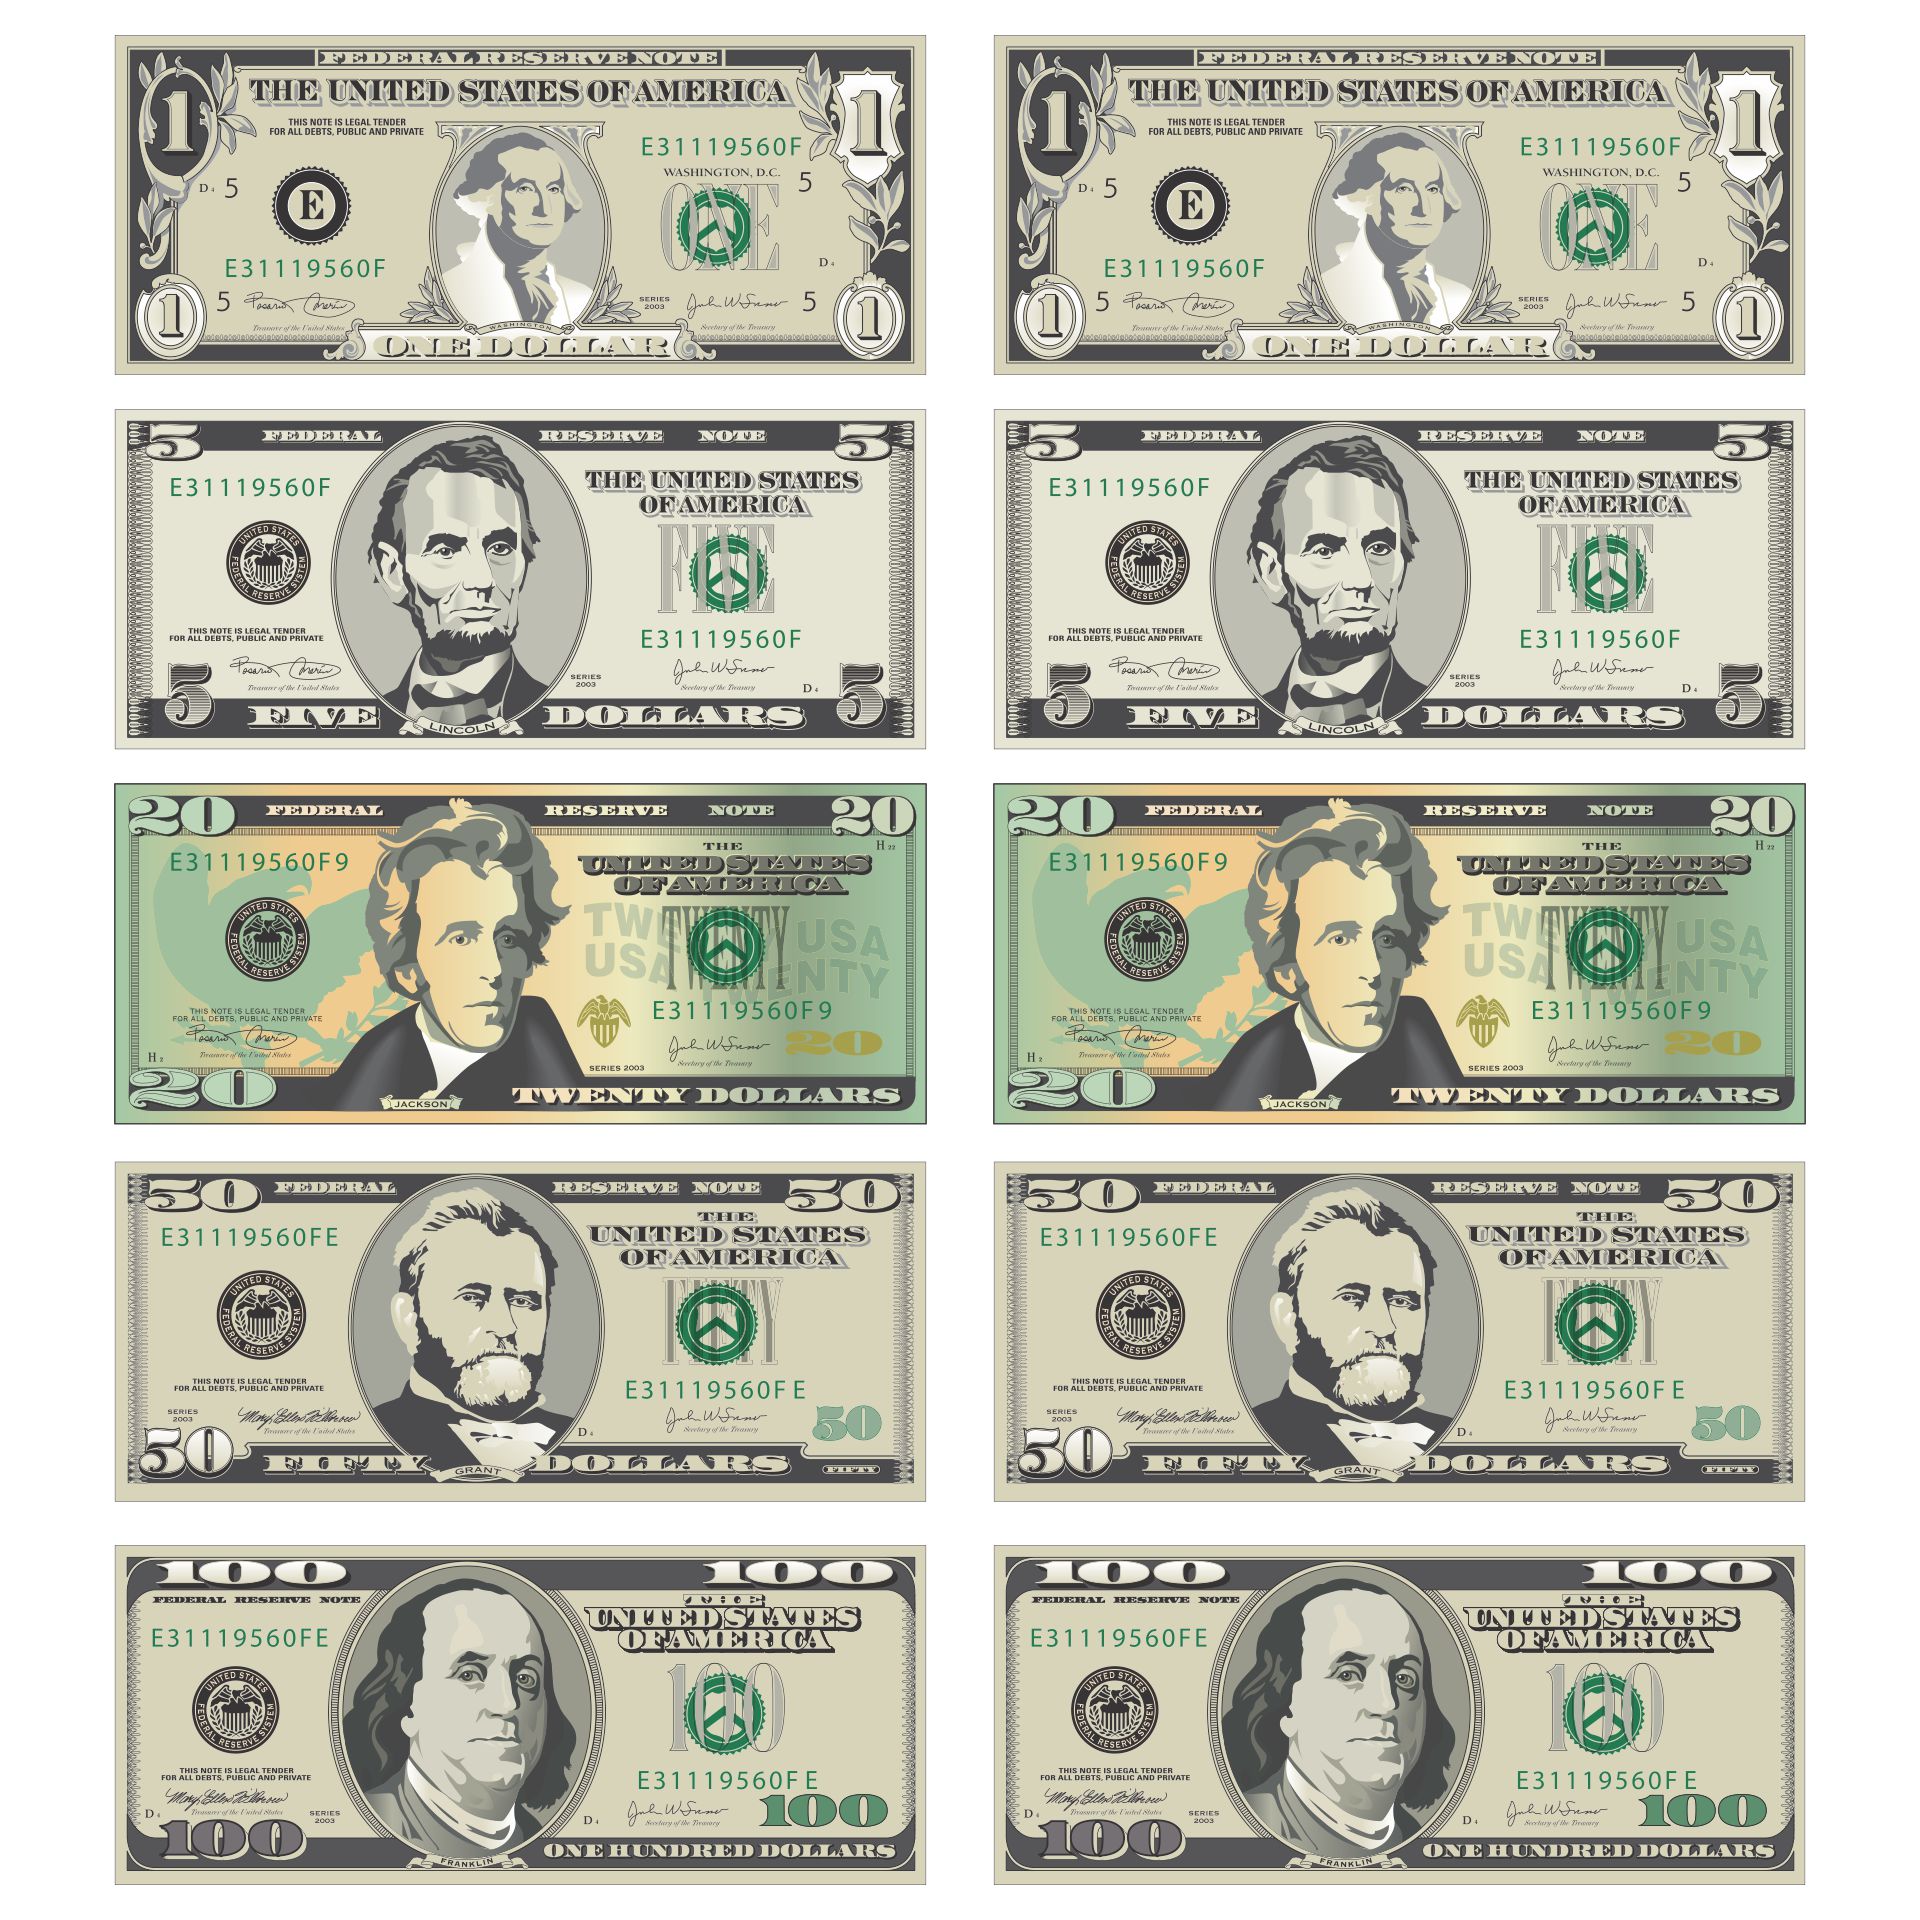 Printable Fake Money Sheets_13499